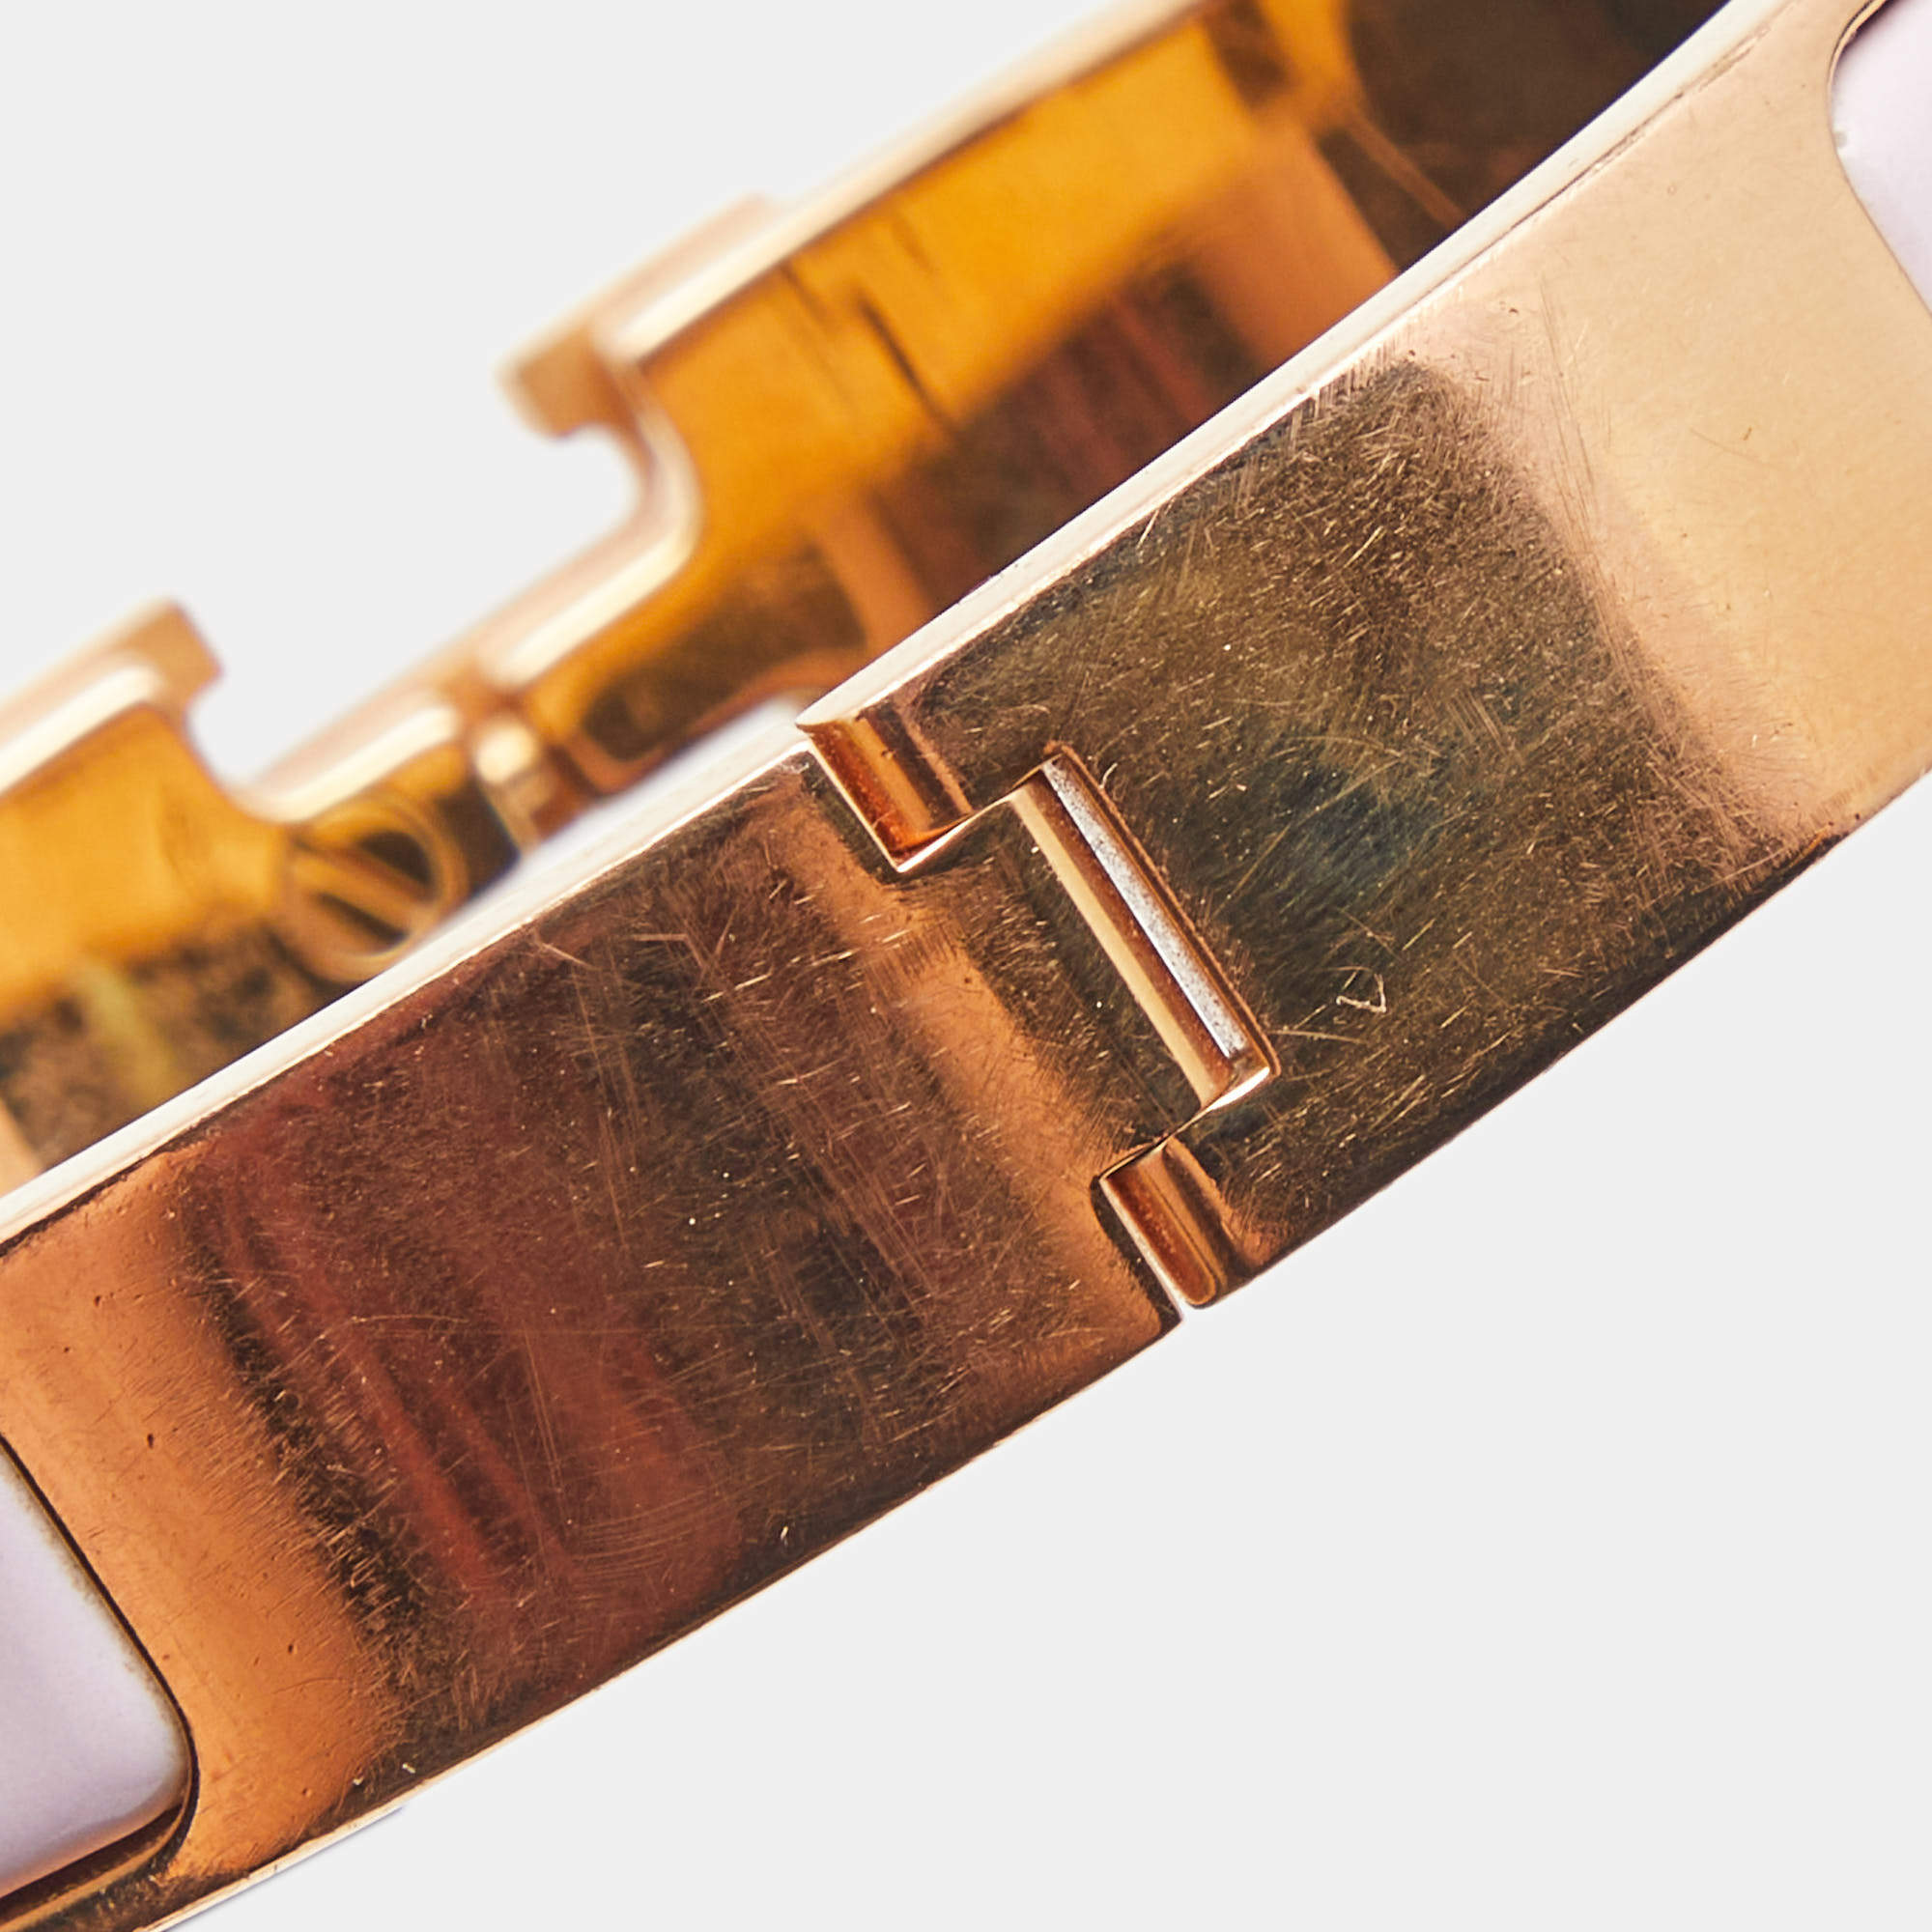 Hermès Gold-plated & Orange Enamel Narrow Clic-clac H Bracelet